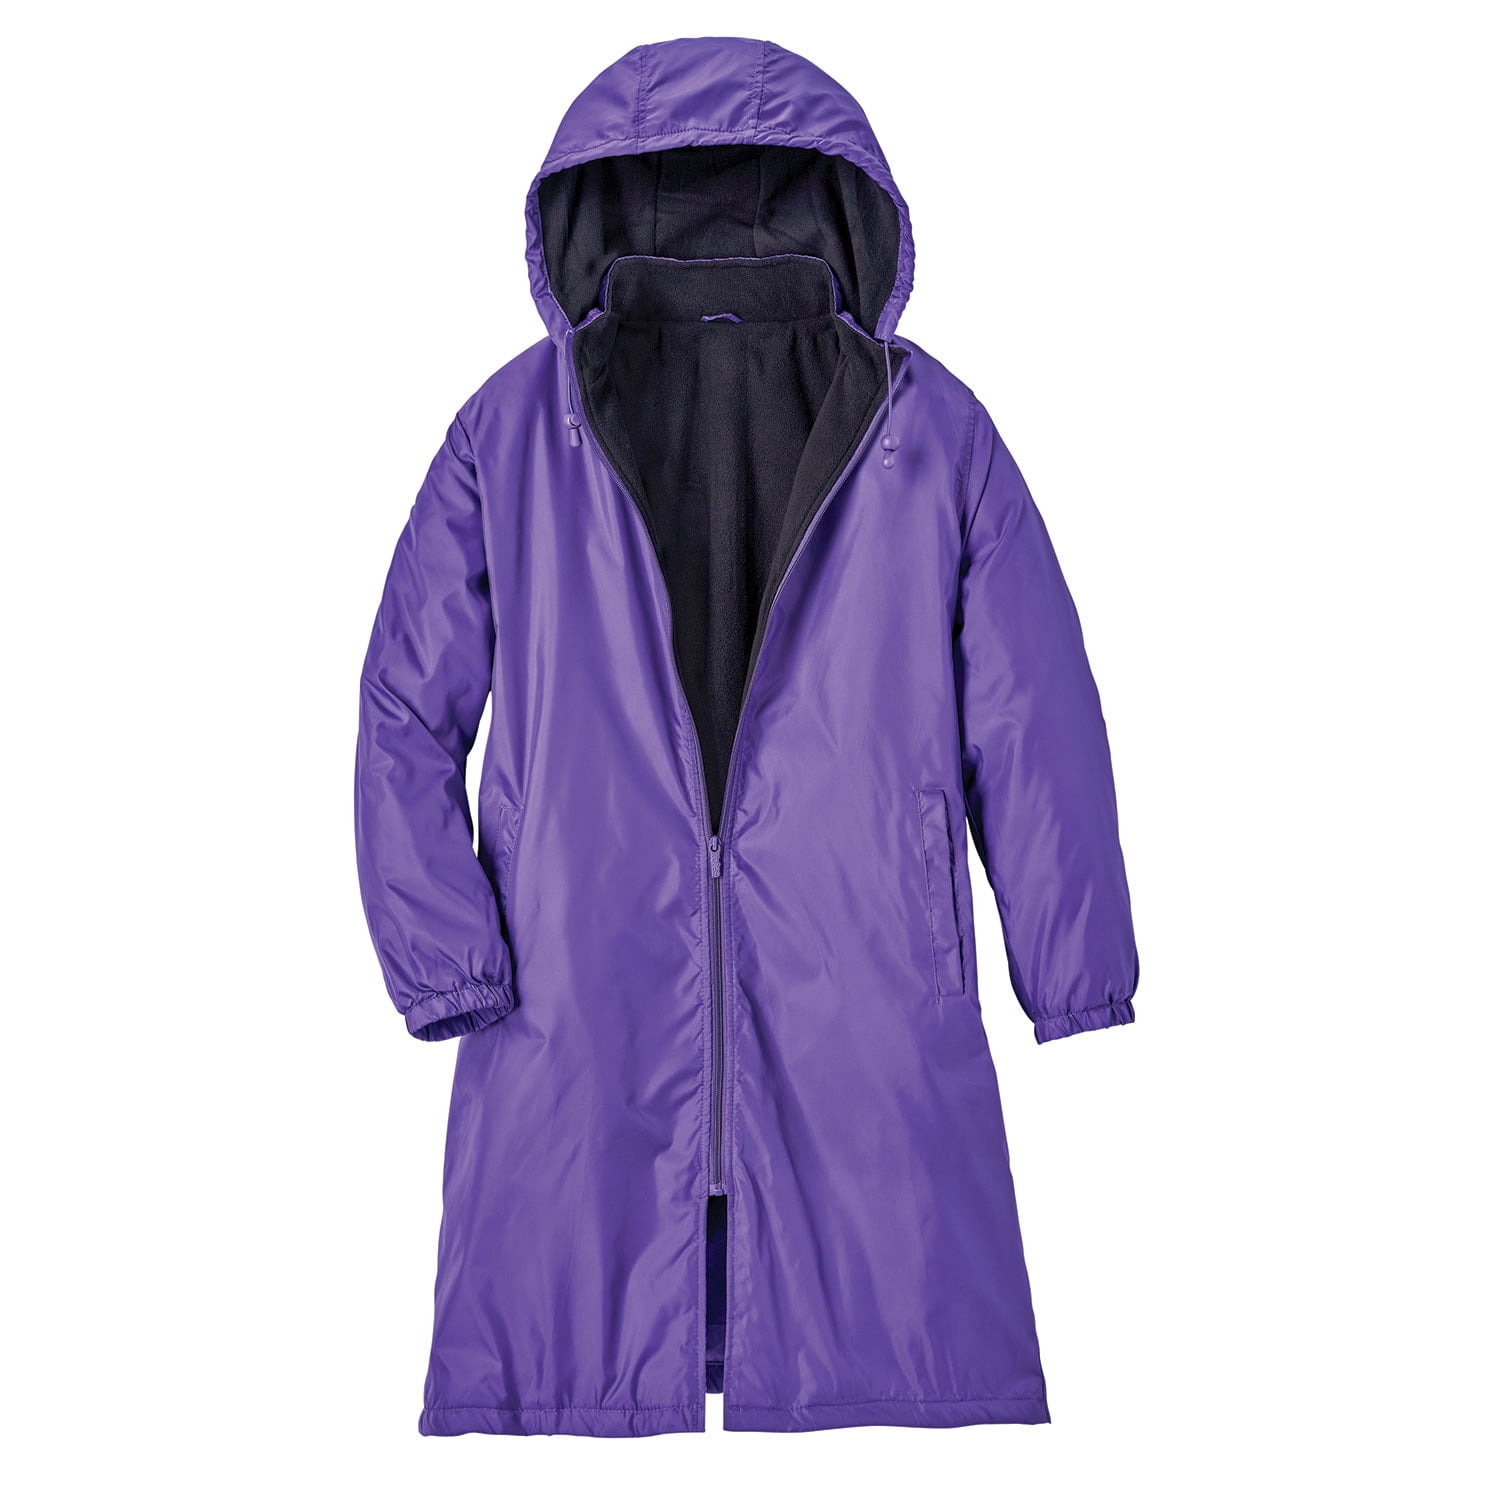 TOTES Womens Rain Jacket with Hood - Long Raincoat, Womens Coat Storm ...